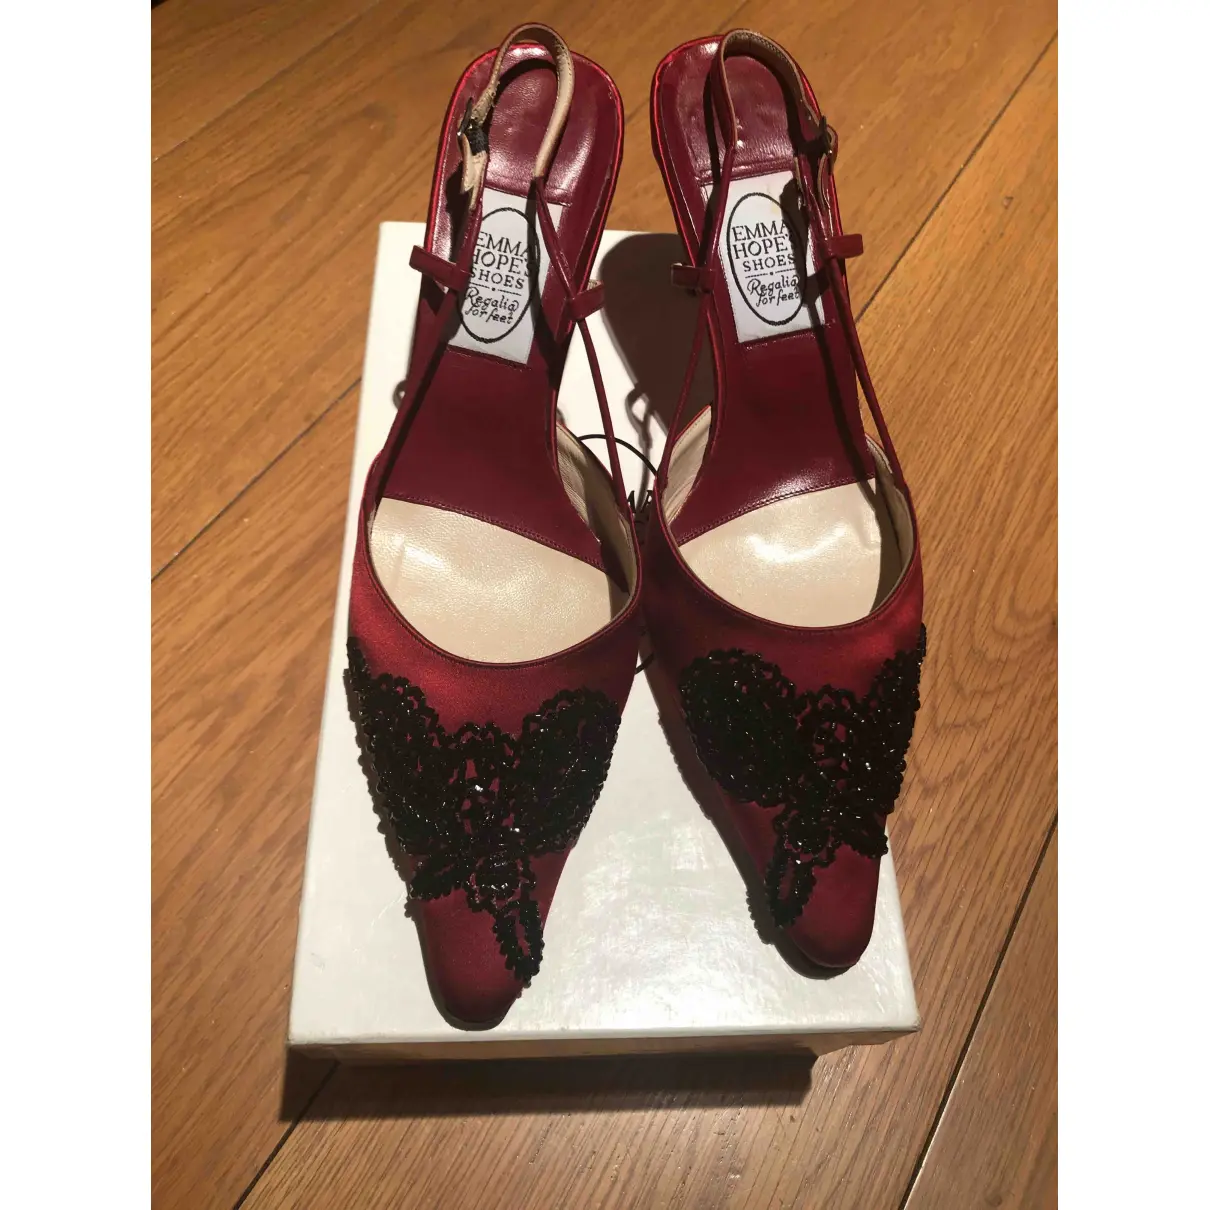 Buy Emma Hope Cloth heels online